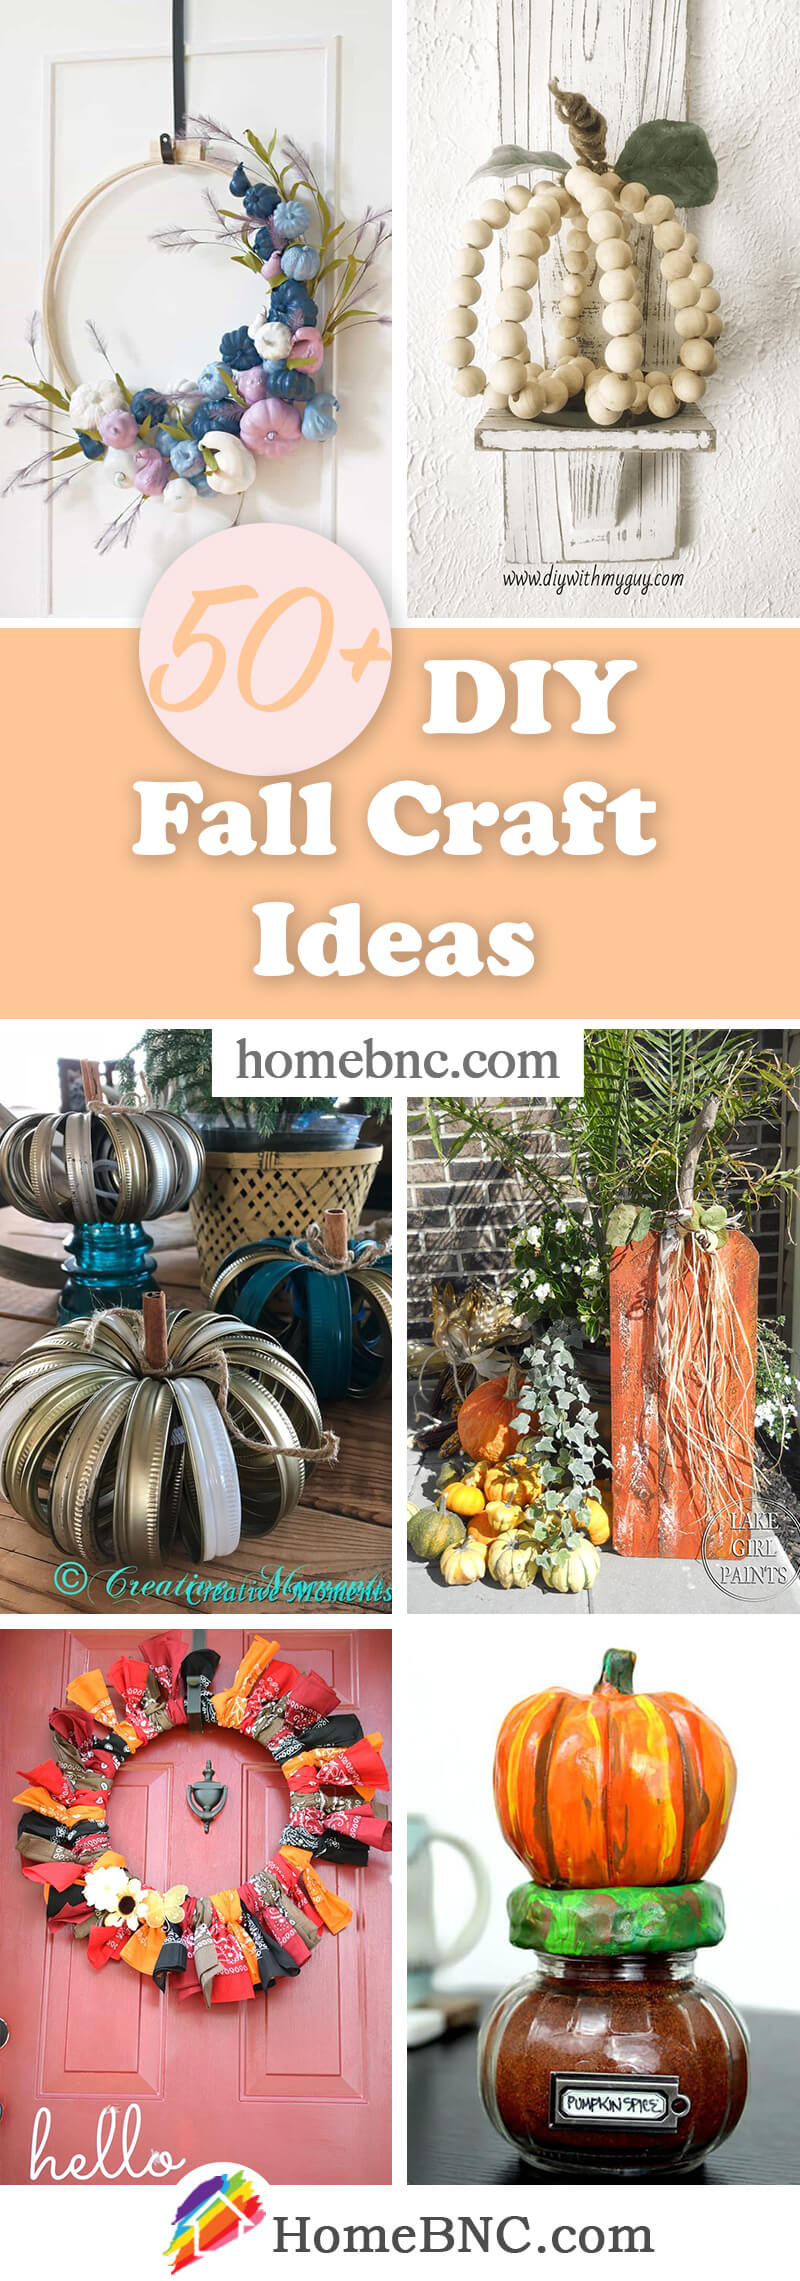 DIY Fall Crafts